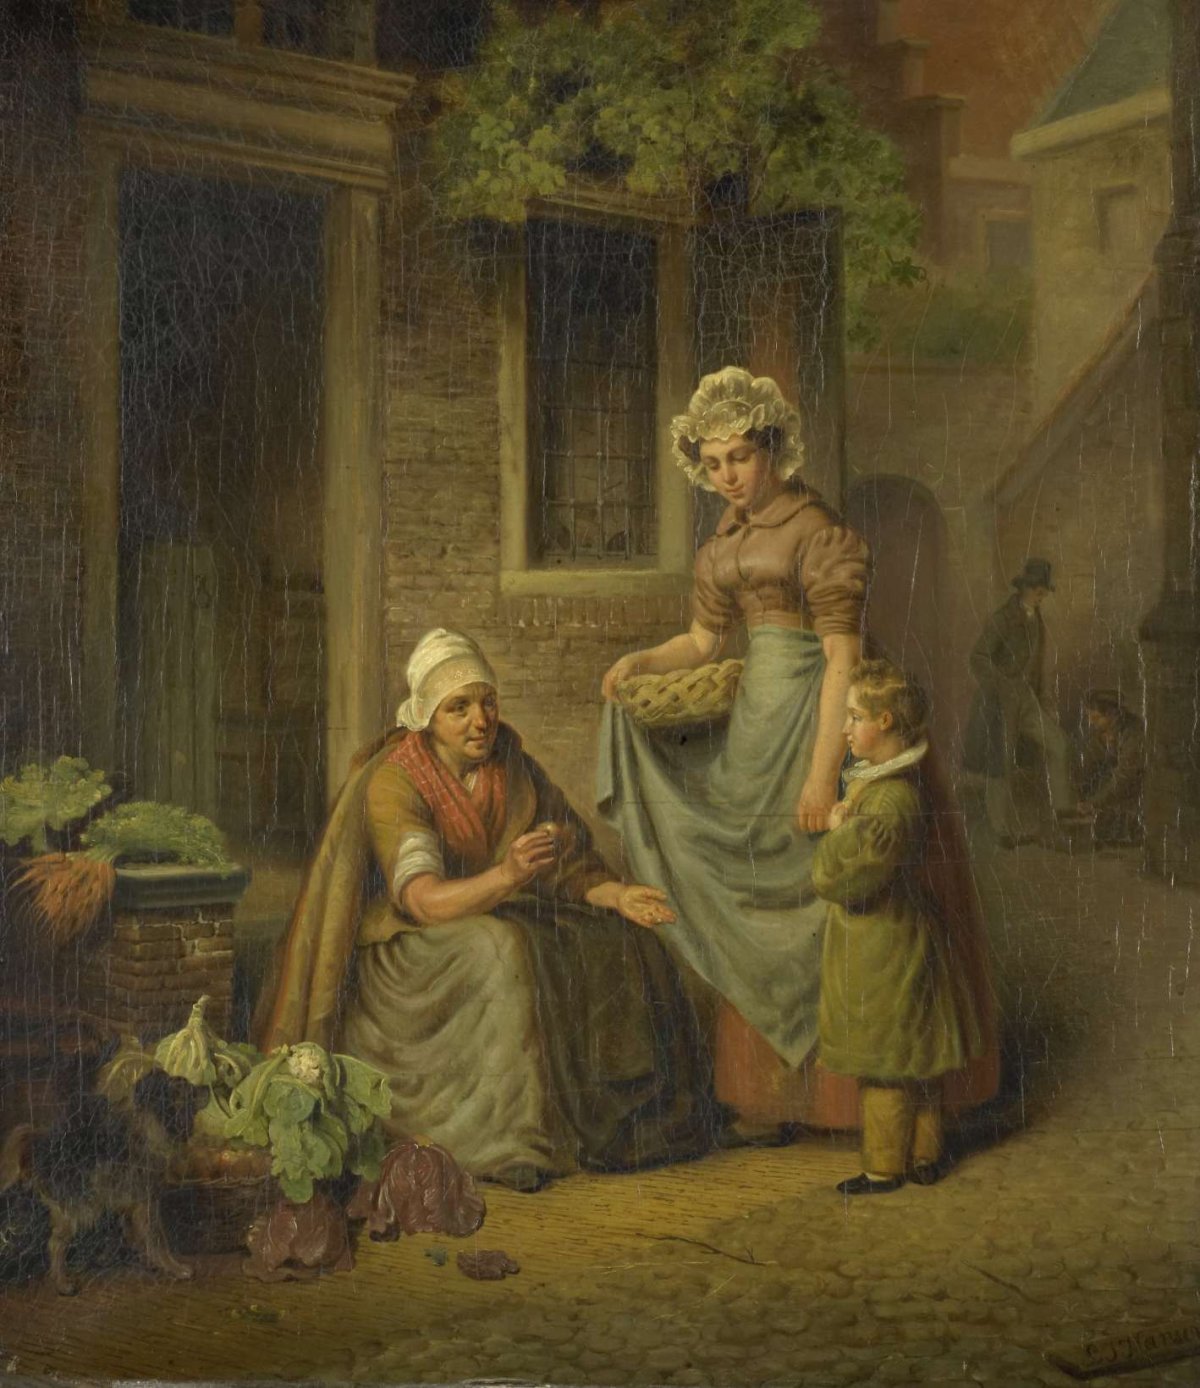 Woman Selling Vegetables, Lambertus Johannes Hansen, 1825 - 1845